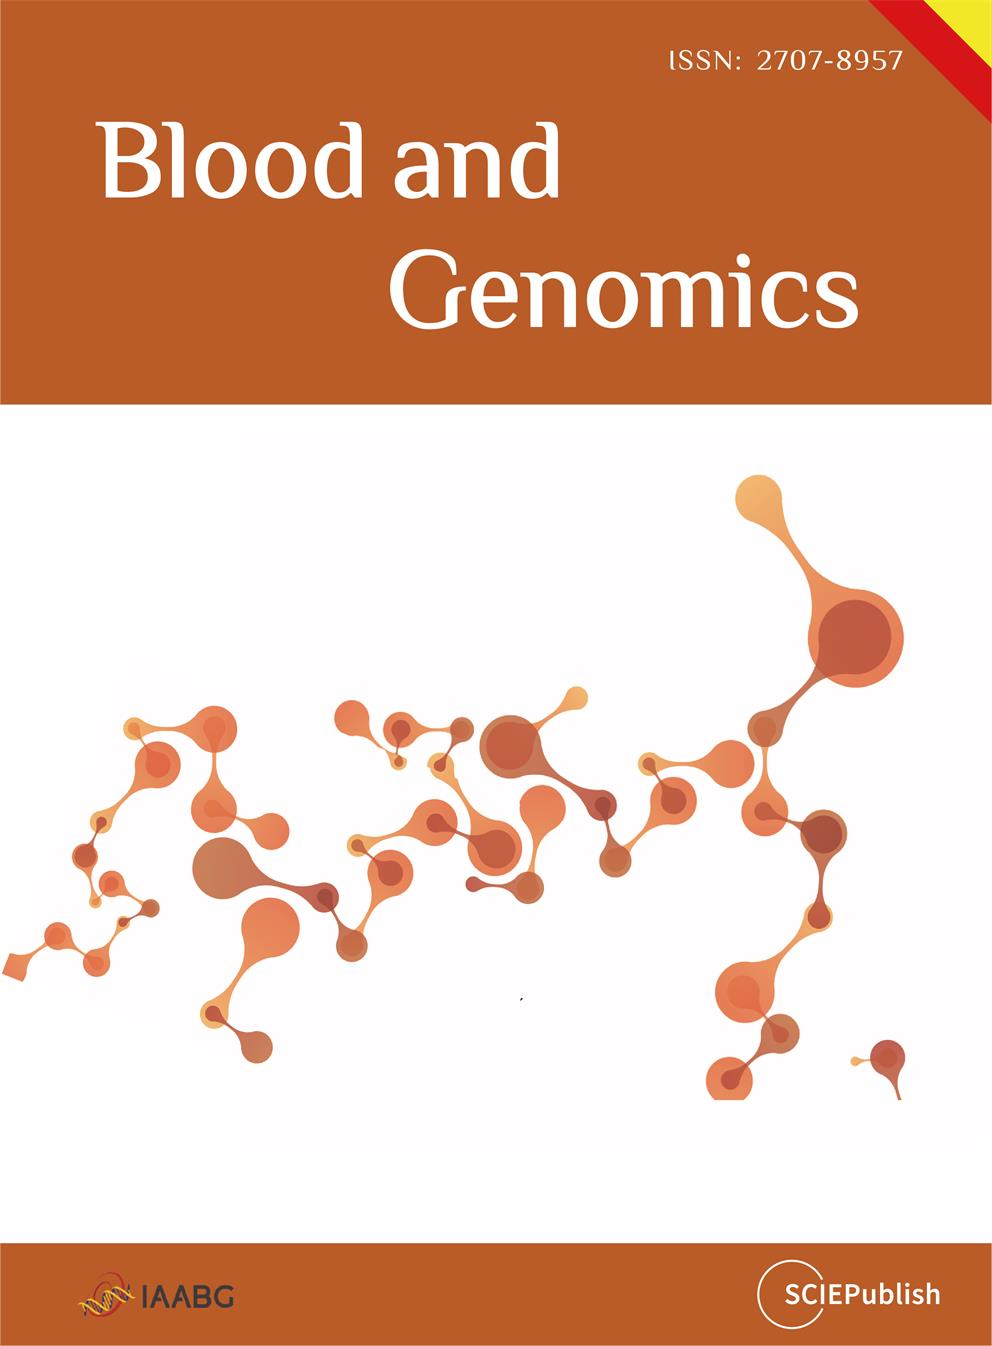 Blood and Genomics-logo